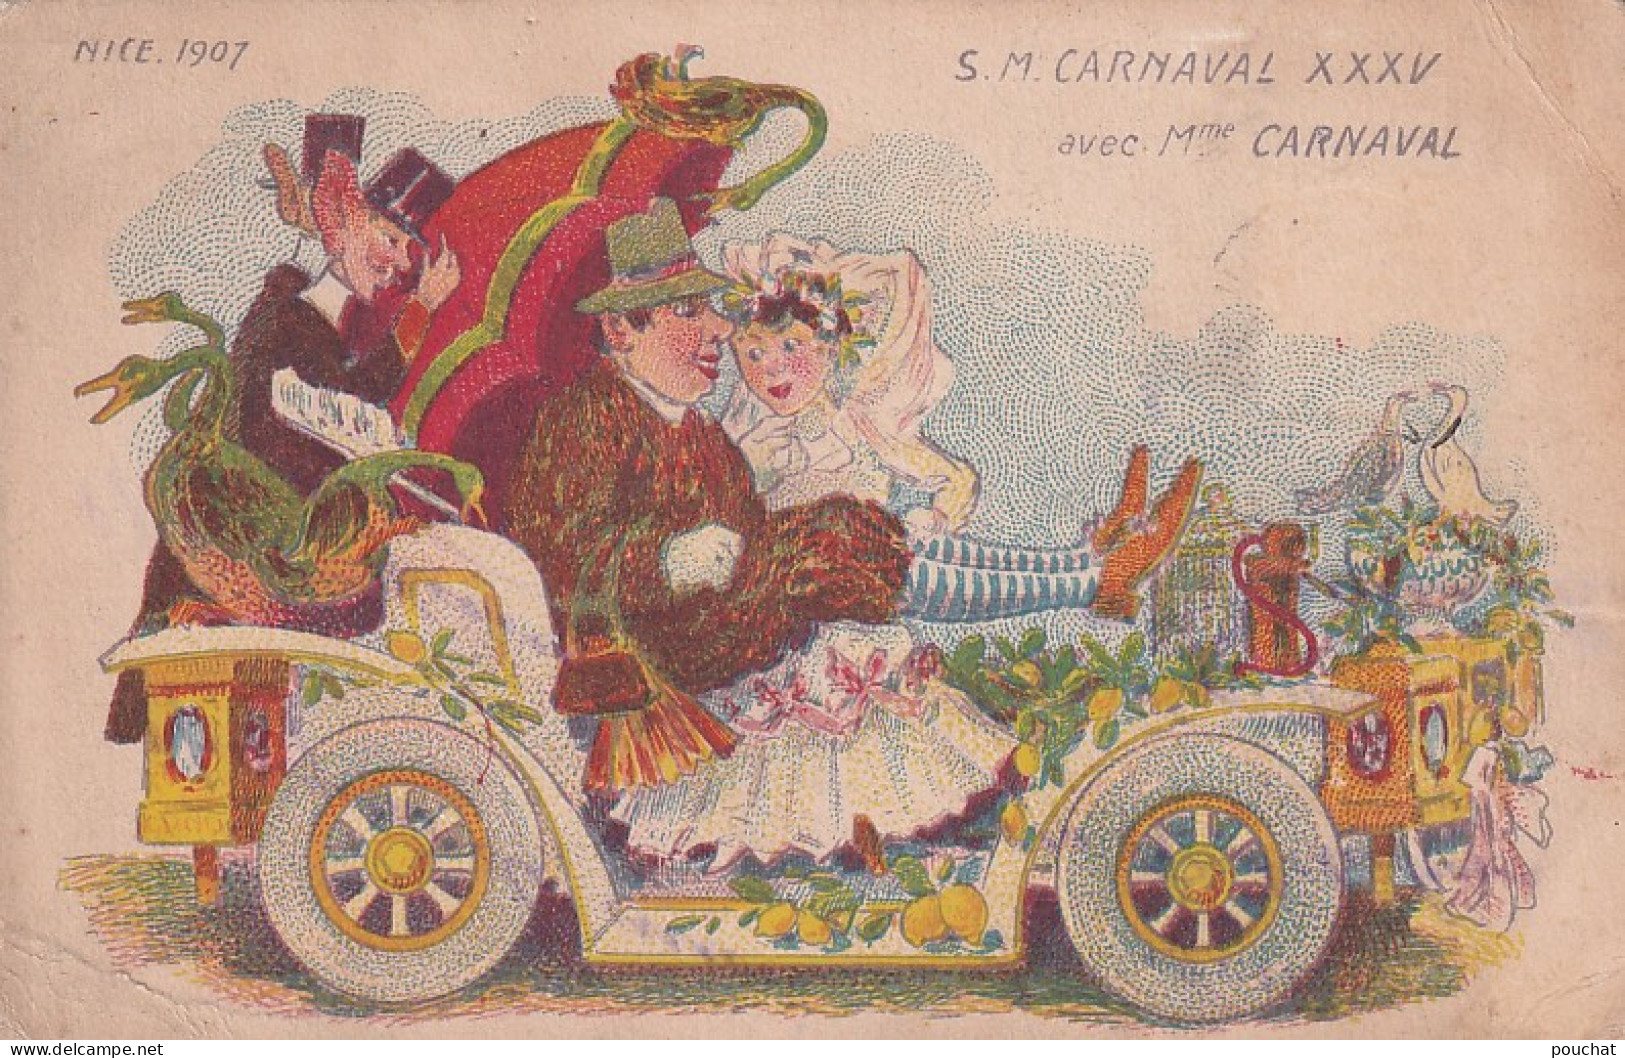 KO 27-(06) NICE 1907 - S. M. CARNAVAL XXXV AVEC Mme CARNAVAL - ILLUSTRATEUR - Carnival